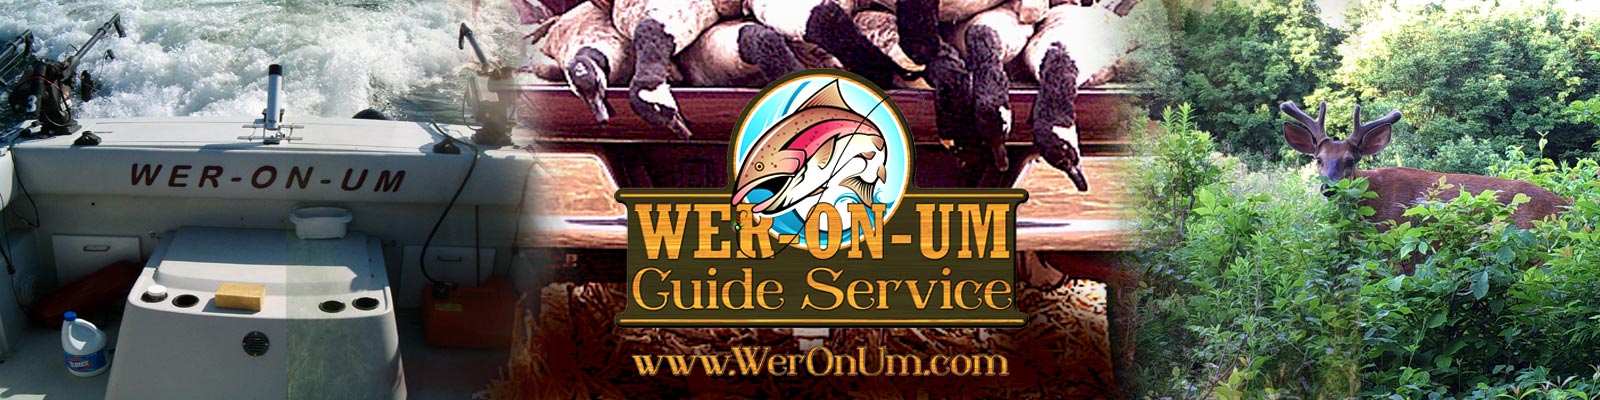 Wer-On-Um Guide Service Banner